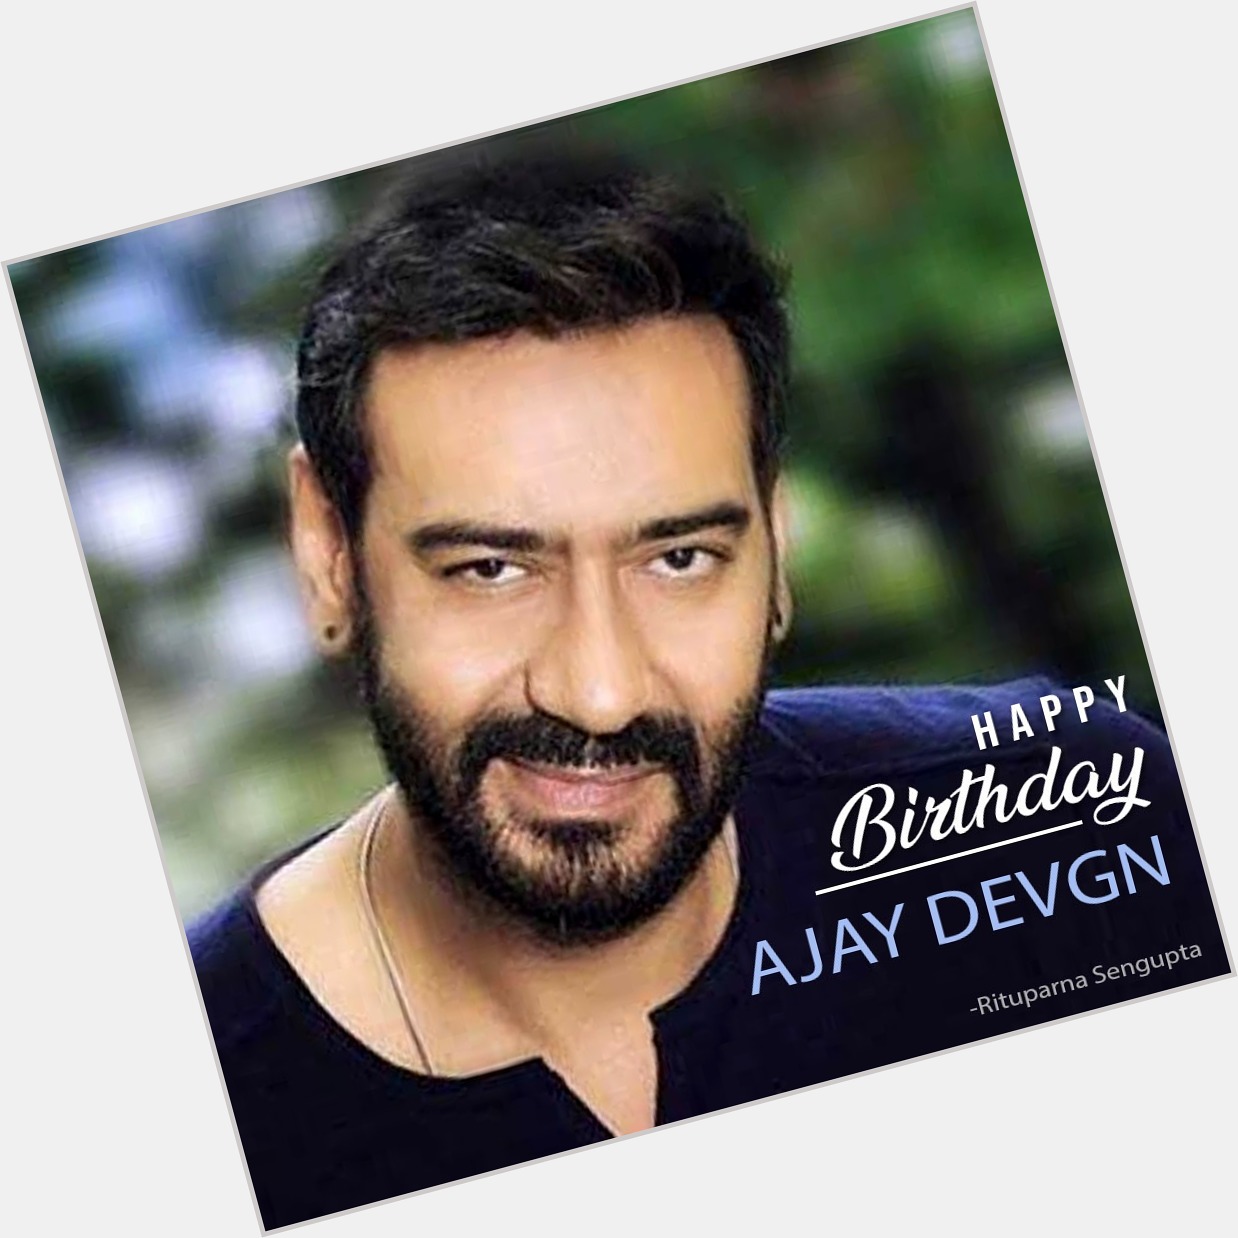 Happy Birthday to the great actor, Ajay Devgan! 
Stay happy & safe!   